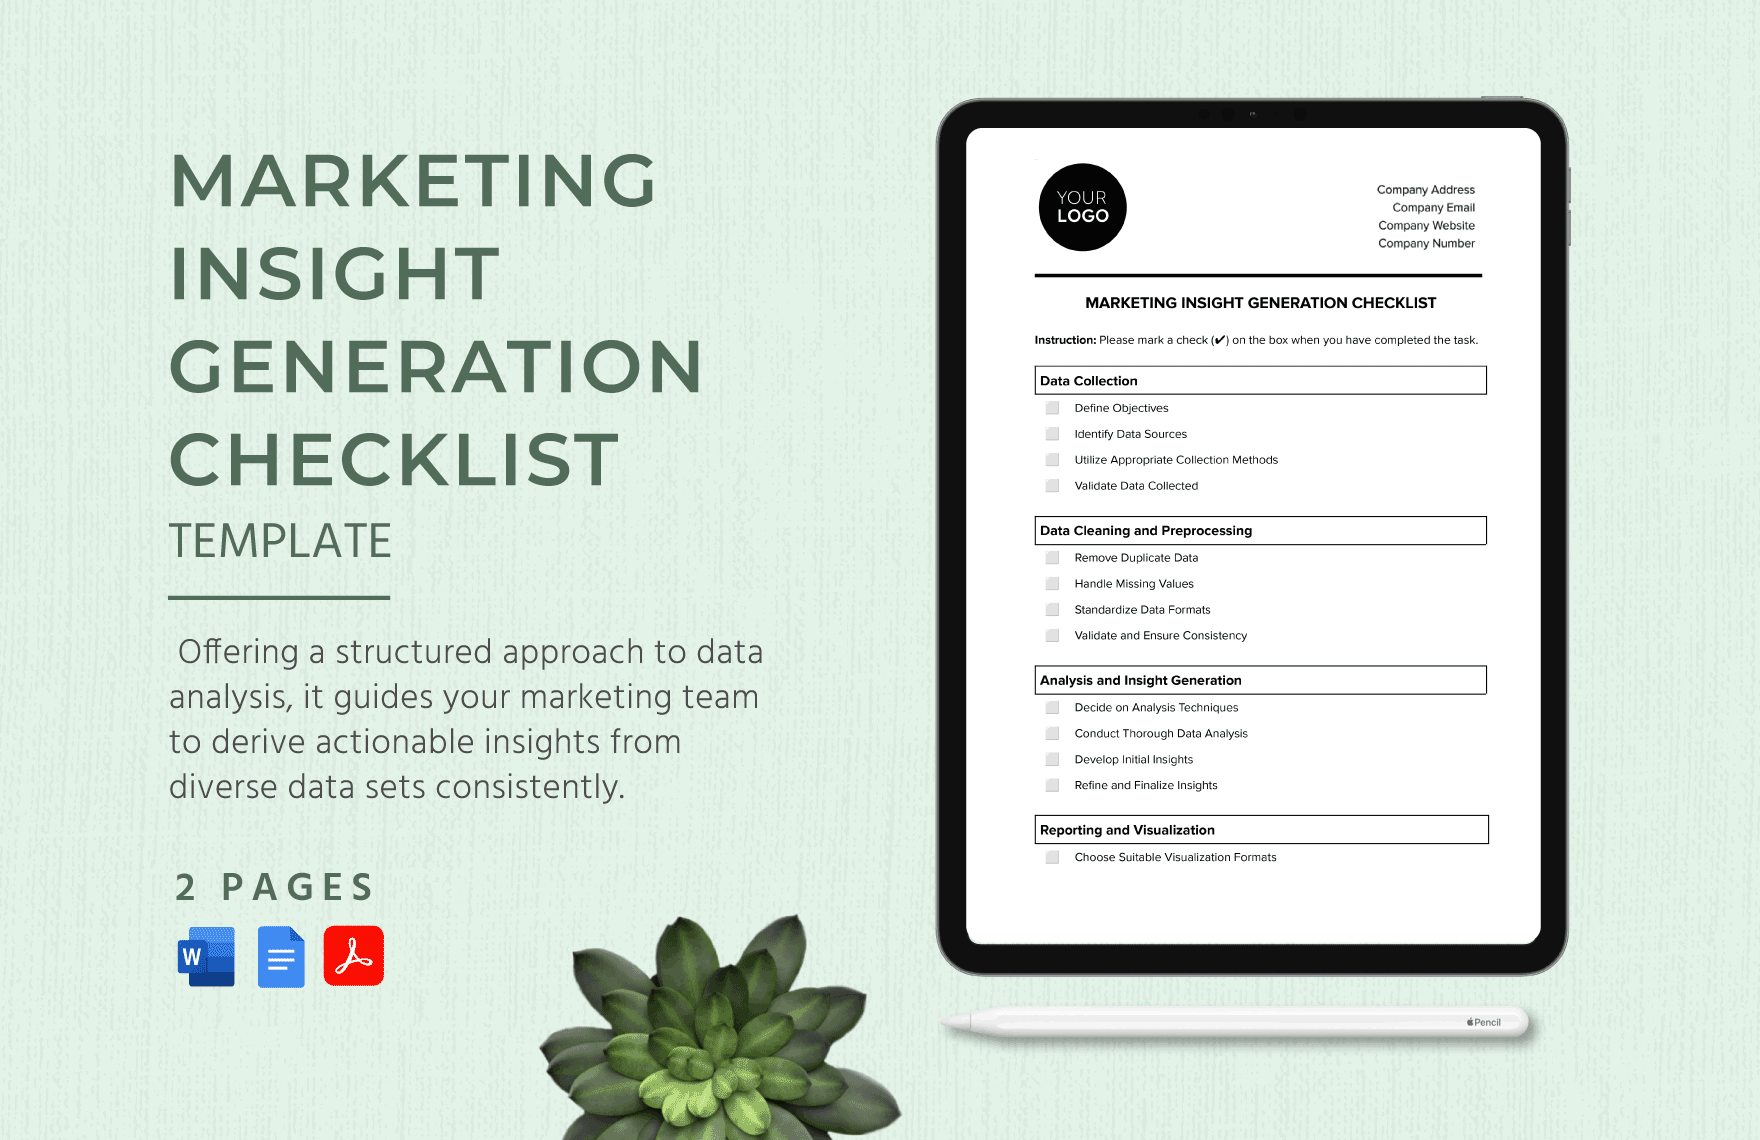 Marketing Insight Generation Checklist Template